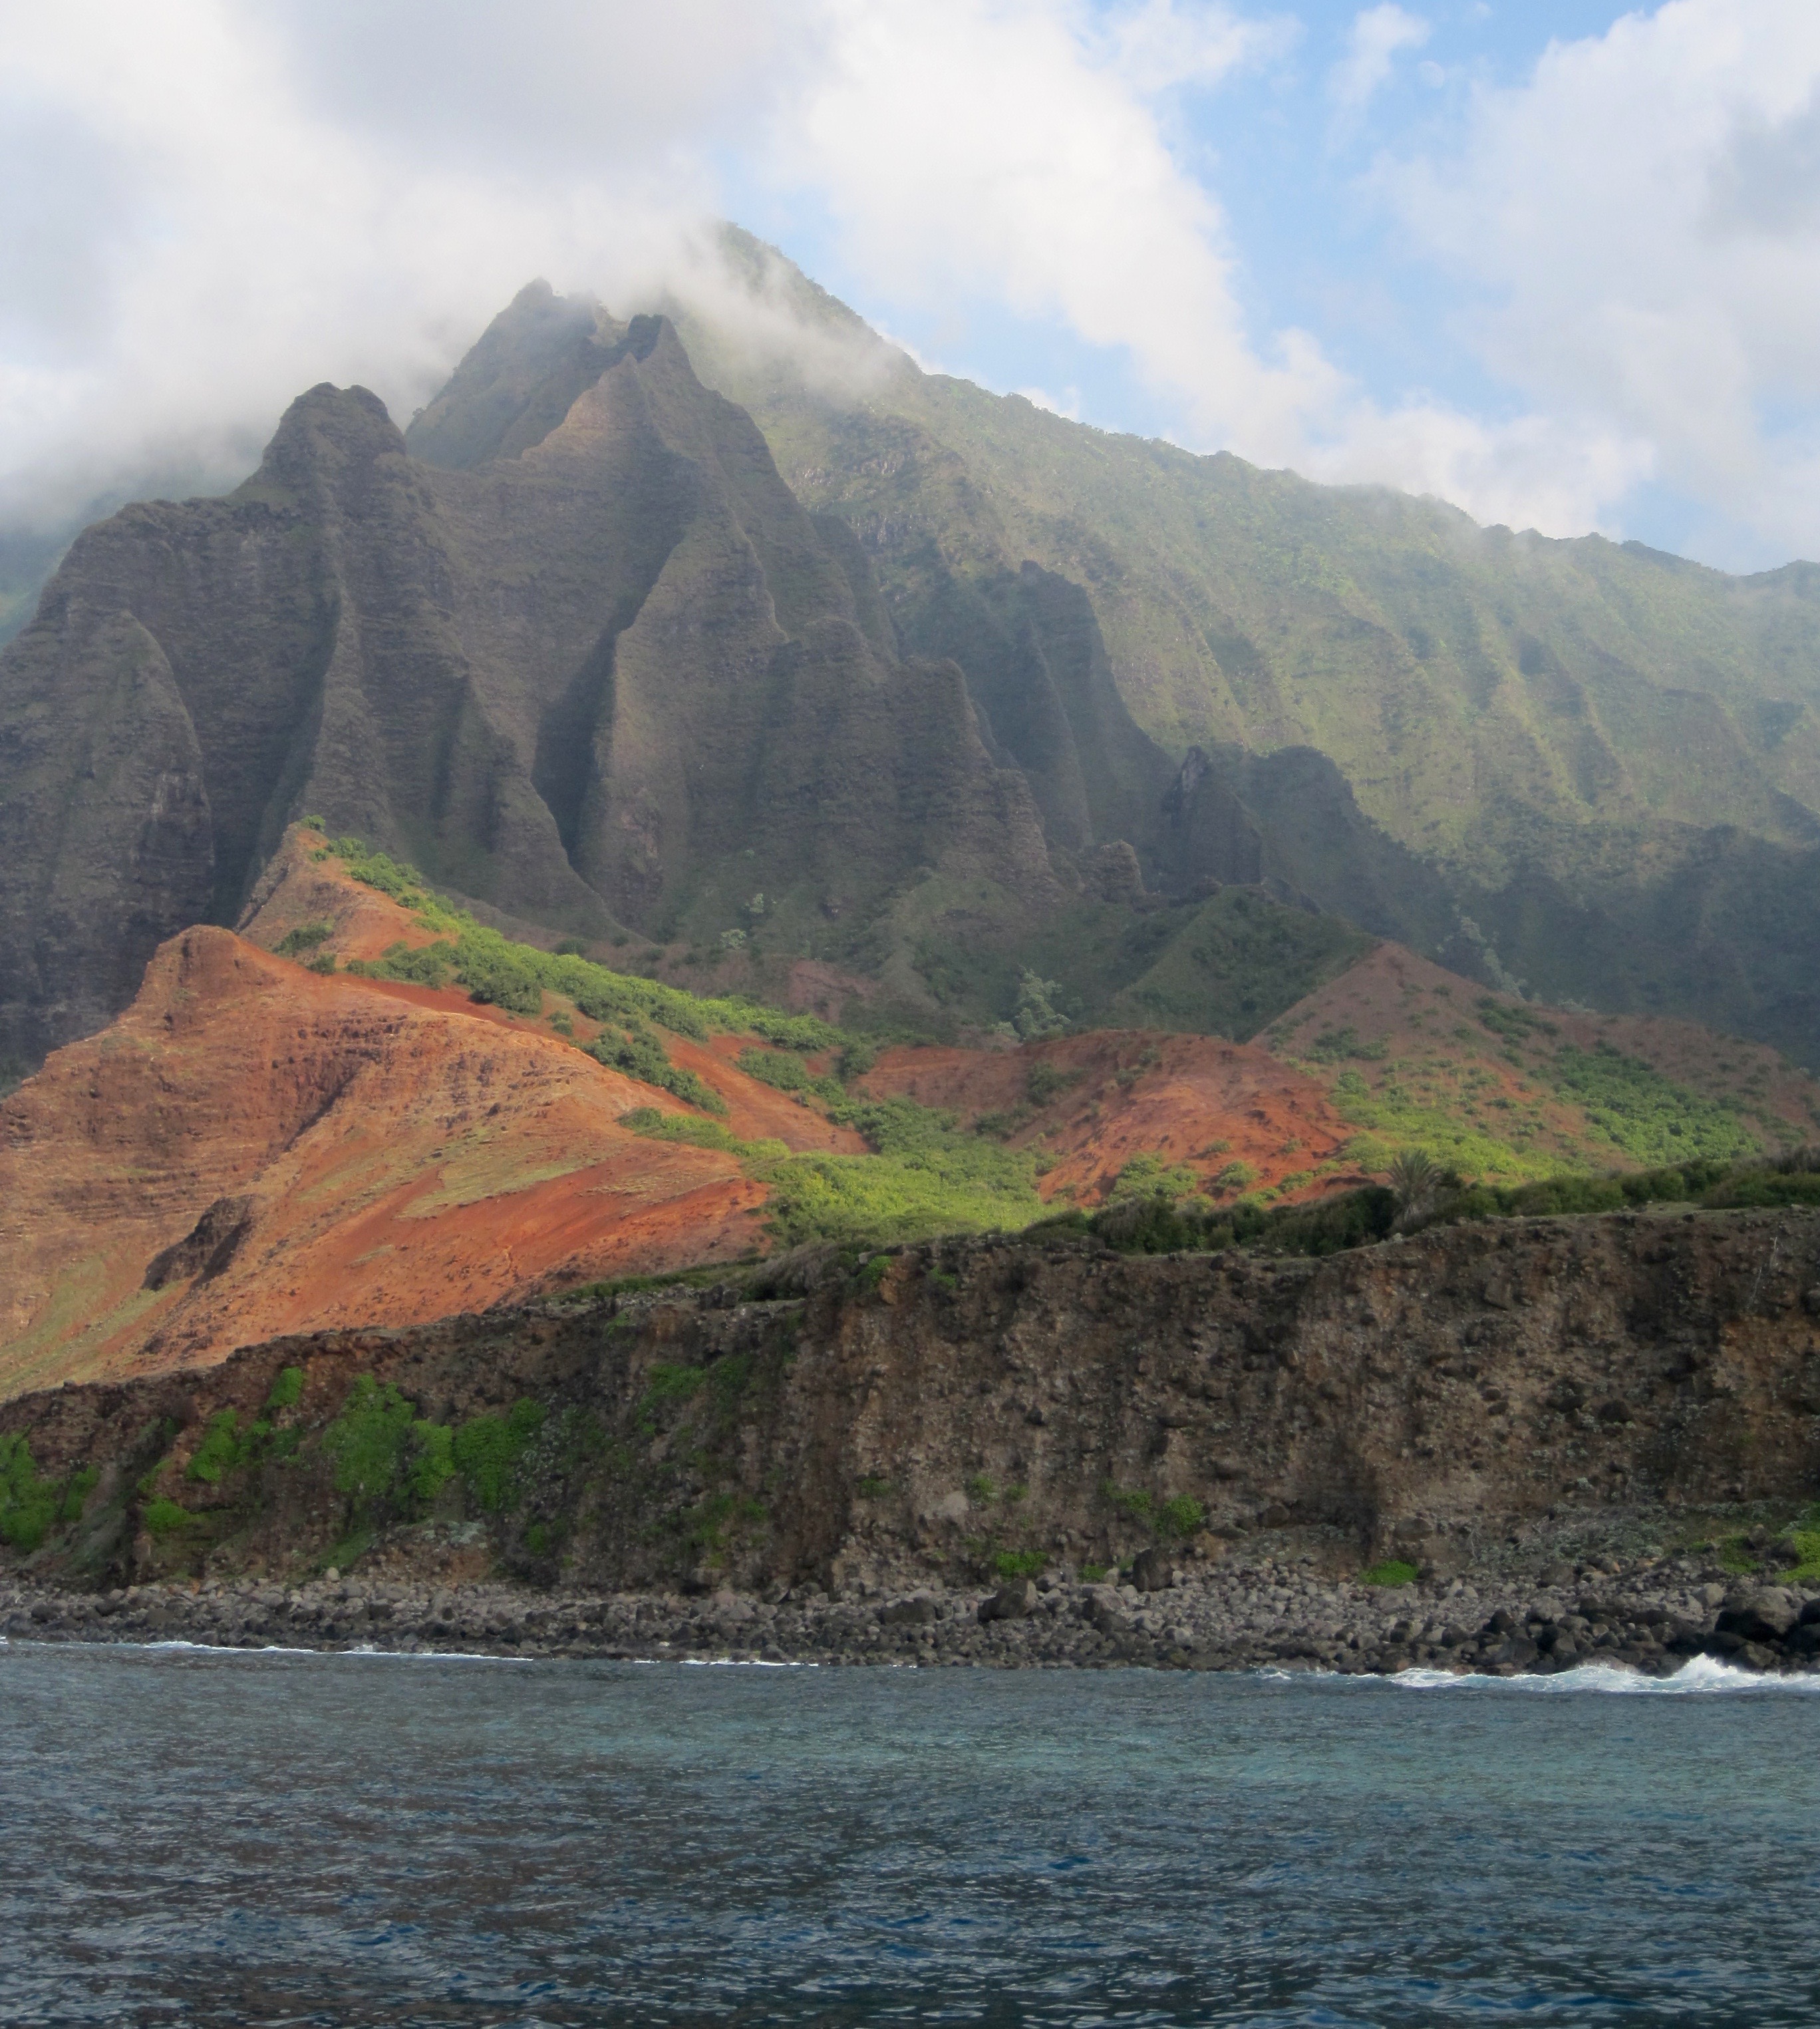 Vivid colors and mountain rain forests along the Nā Pali coast. Photo by Marla Norman.